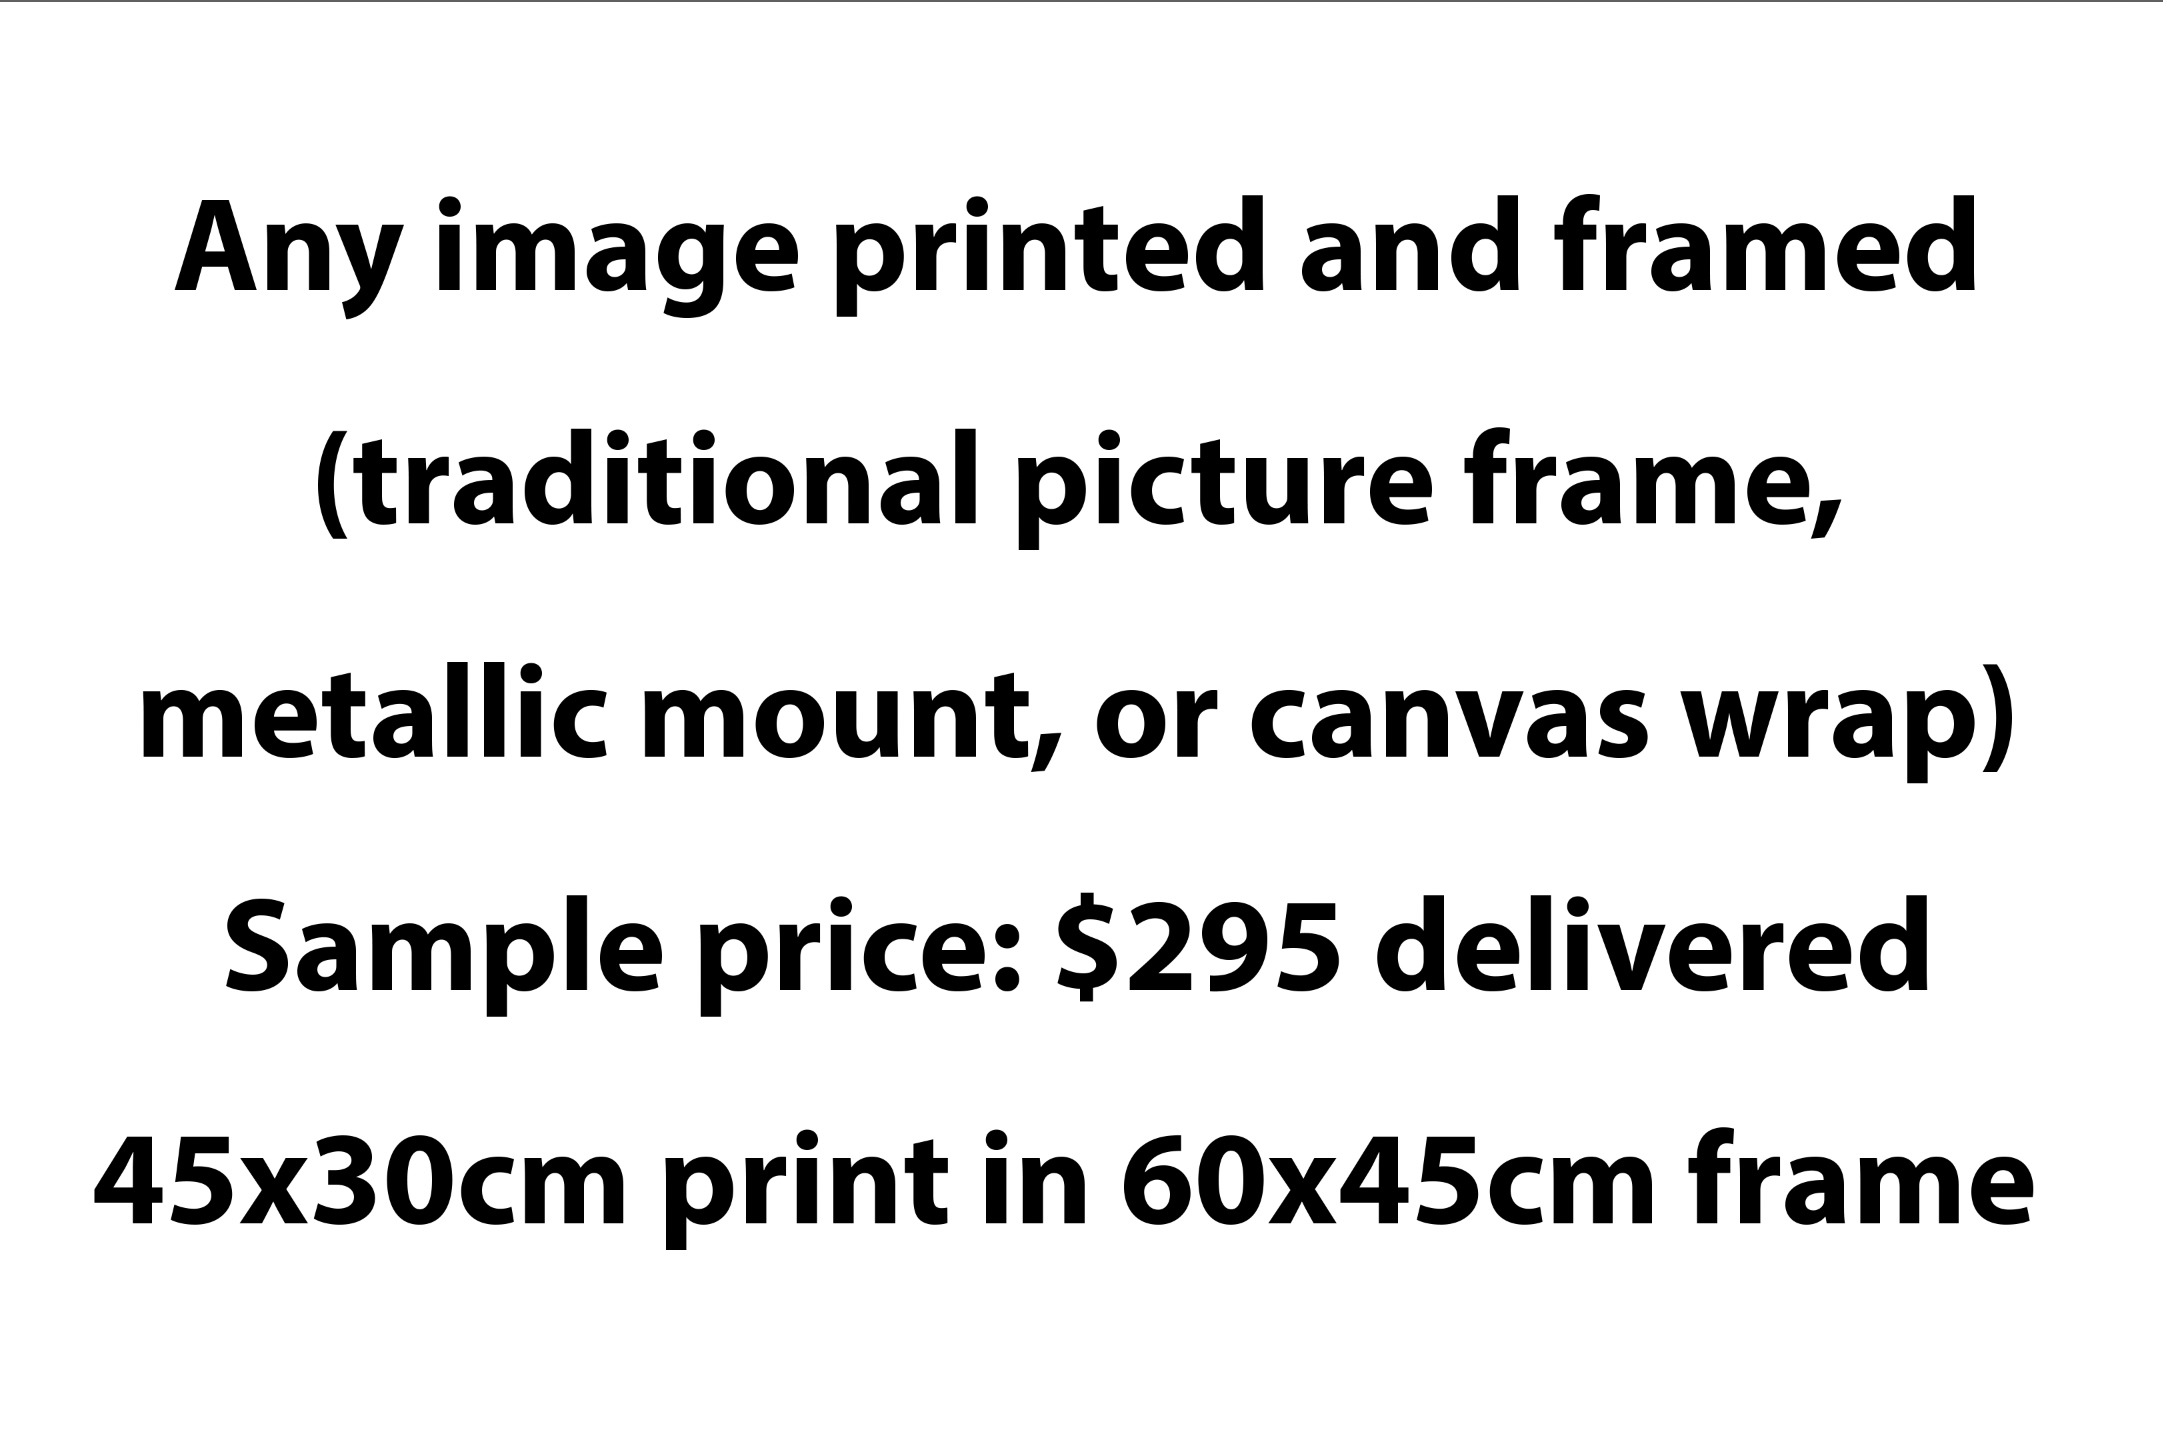 Print sample price